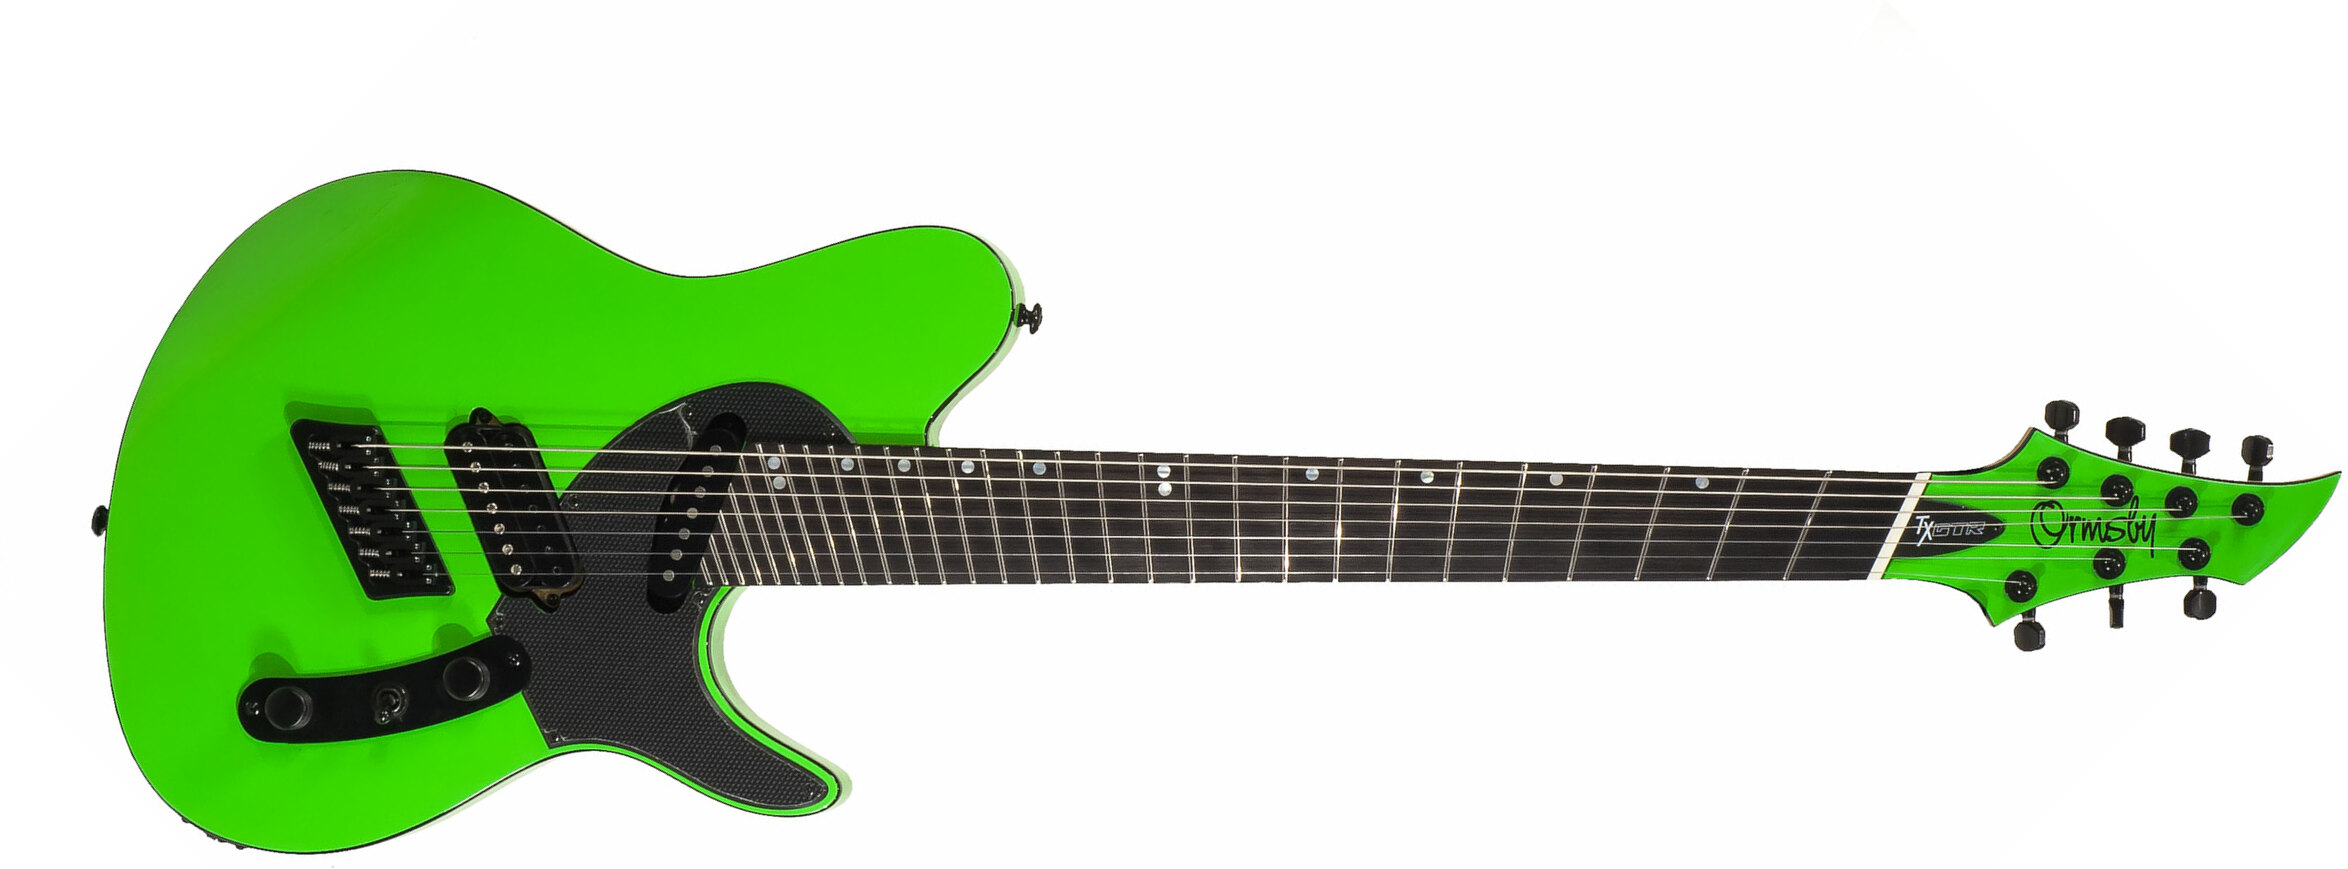 Ormsby Tx Gtr 7 Hs Ht Eb - Chernobyl Green - Multi-scale gitaar - Main picture